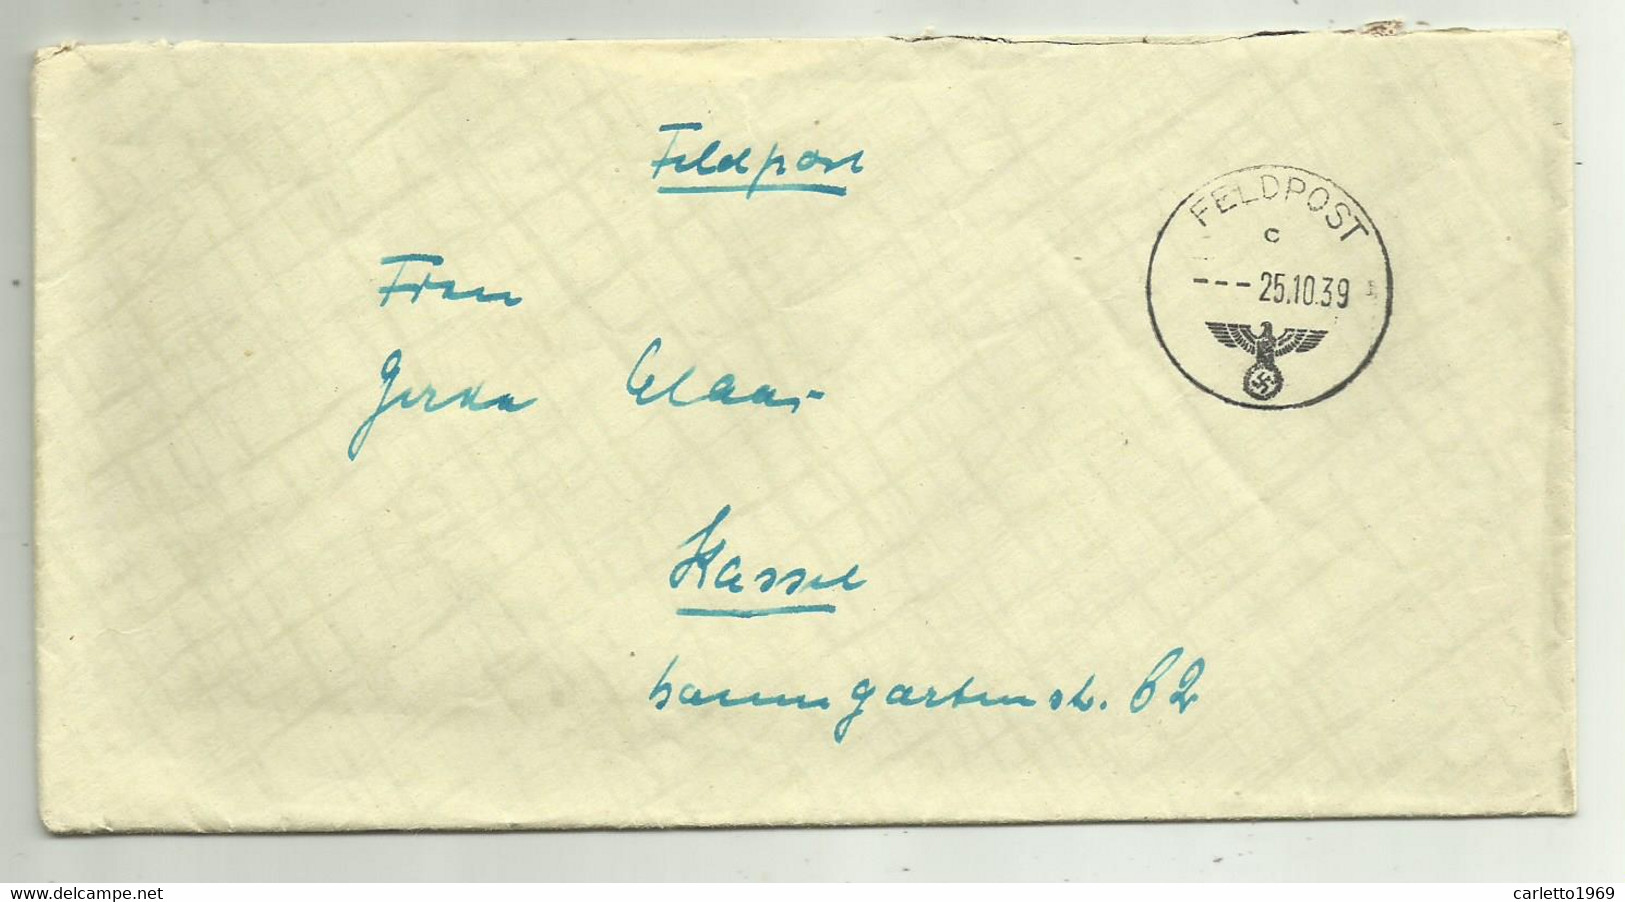 FELDPOST 1939 CON LETTERA - Covers & Documents